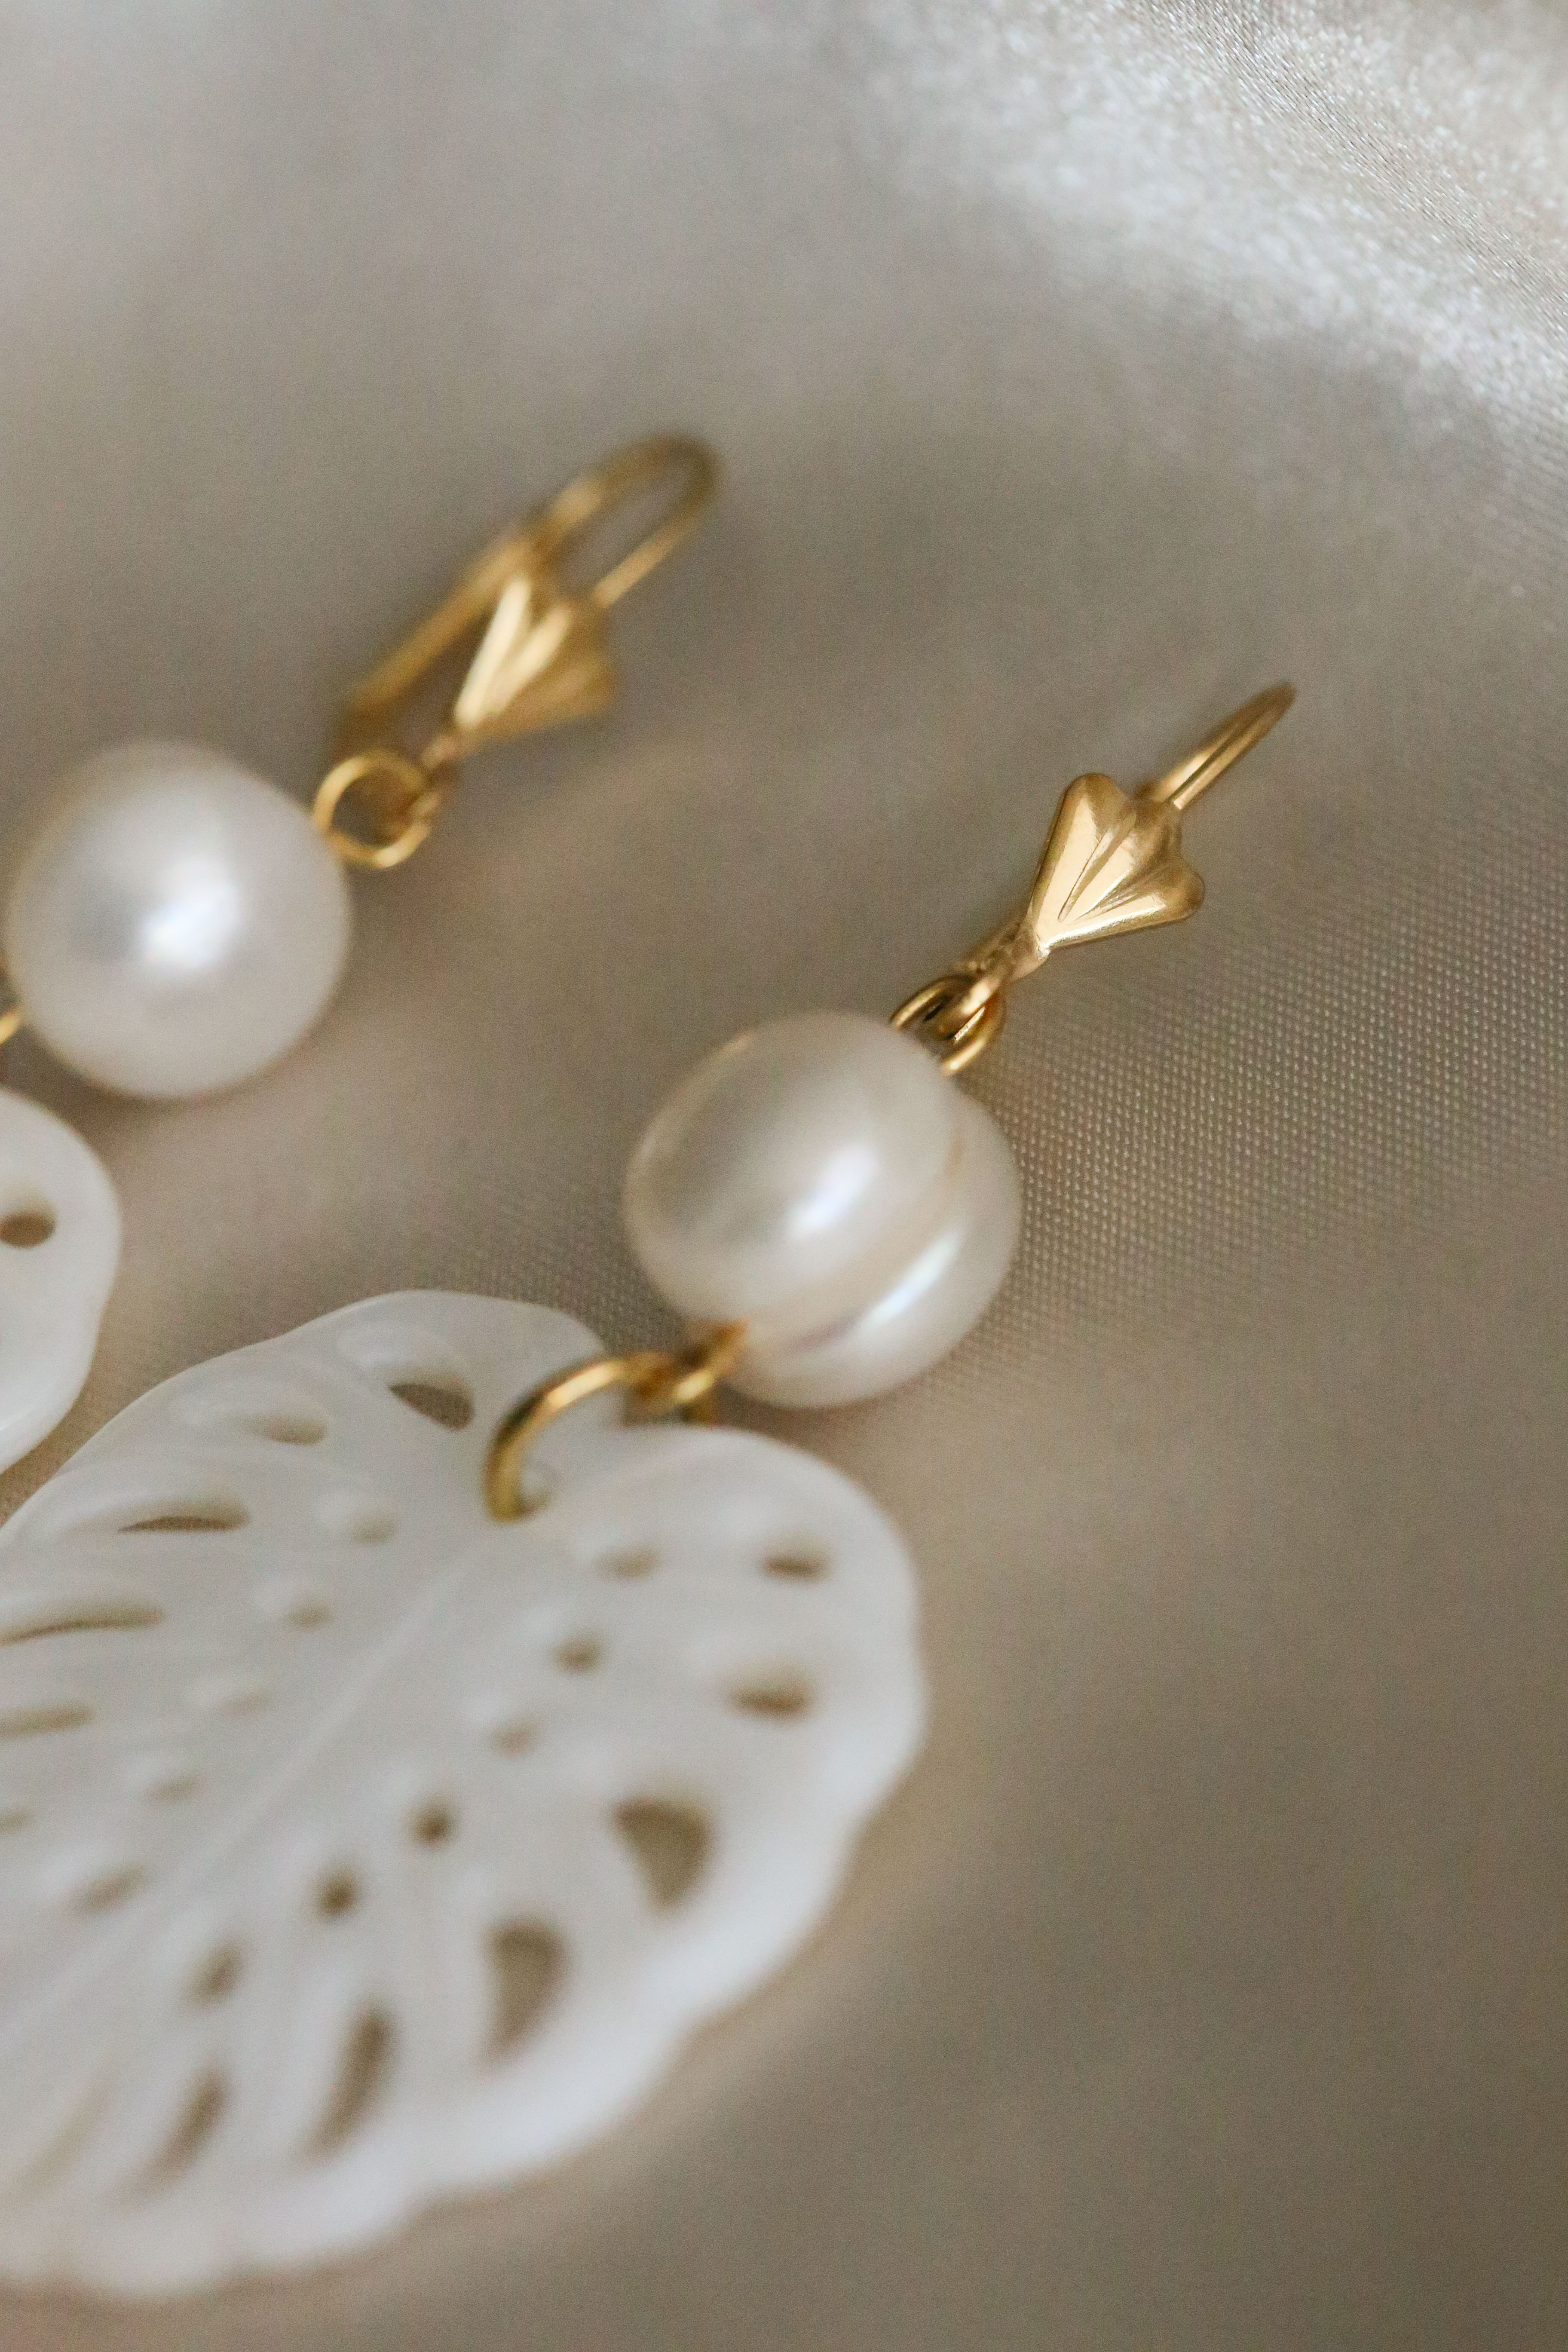 Eden Earrings - Boutique Minimaliste has waterproof, durable, elegant and vintage inspired jewelry